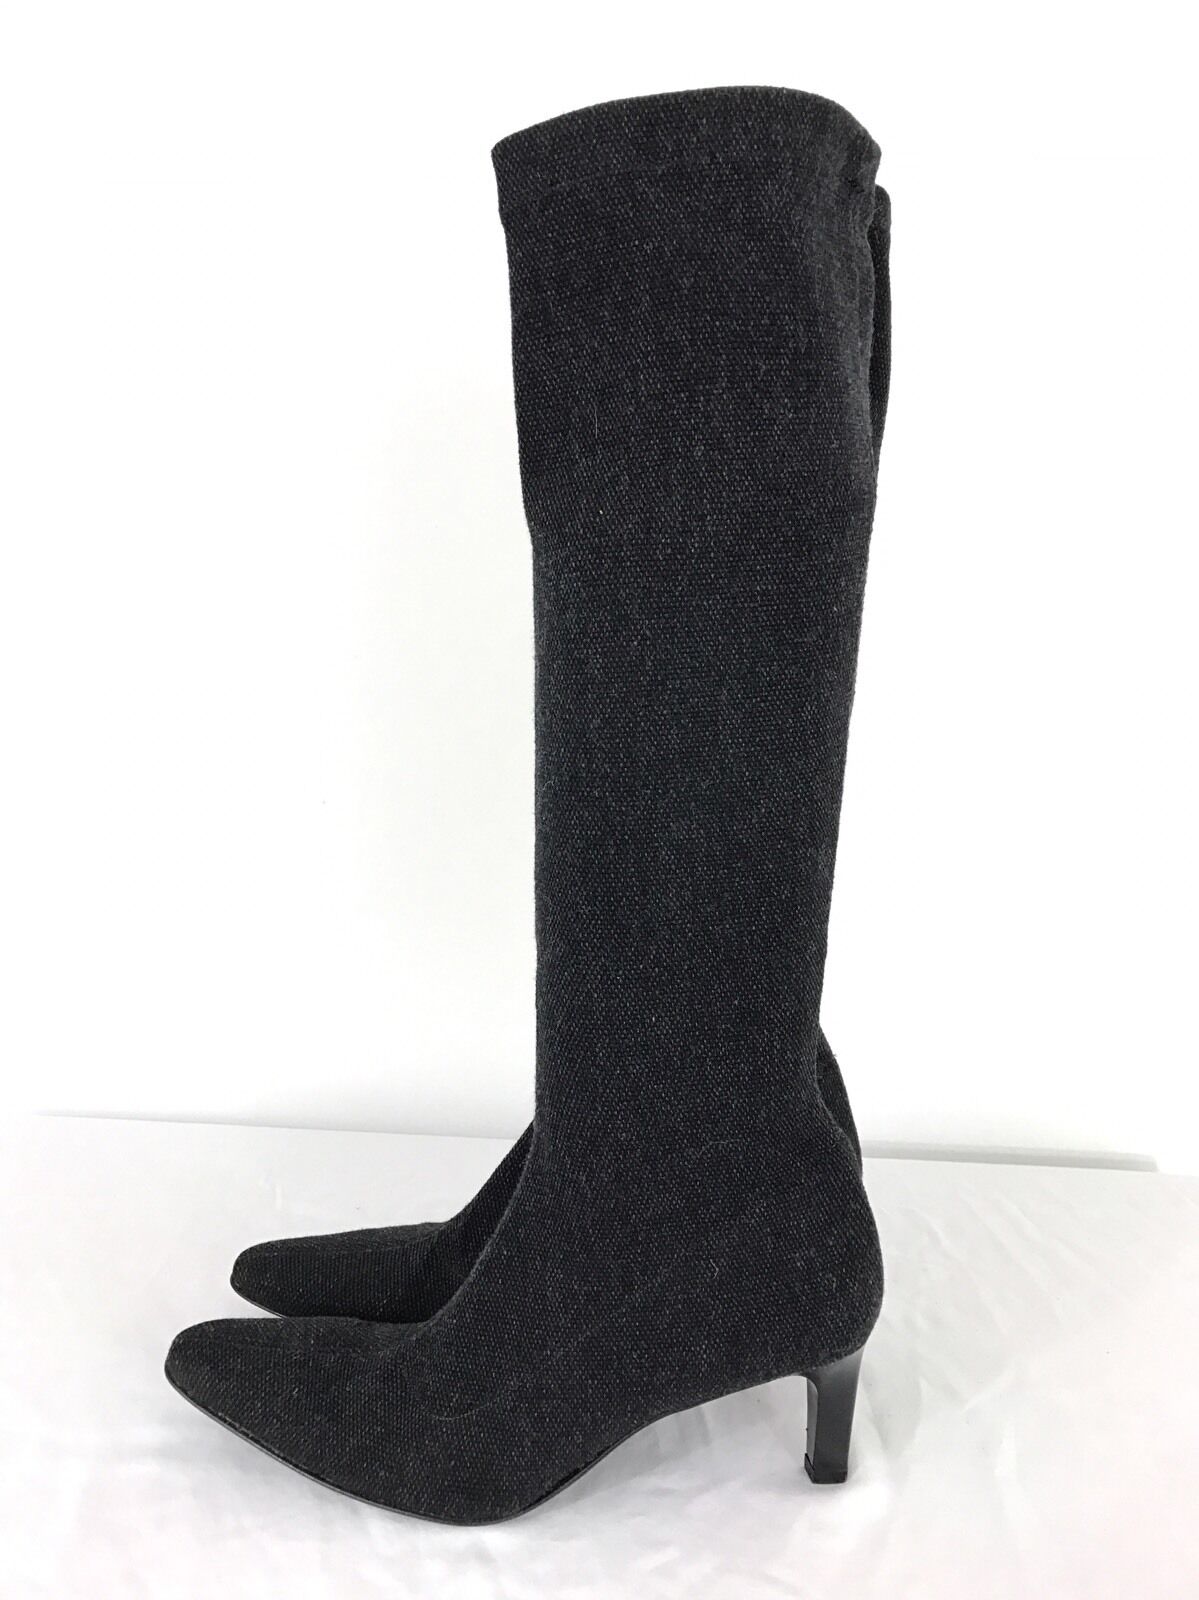 NEW Ralph Lauren Stretch Fabric Pull On Knee High 10B eBay